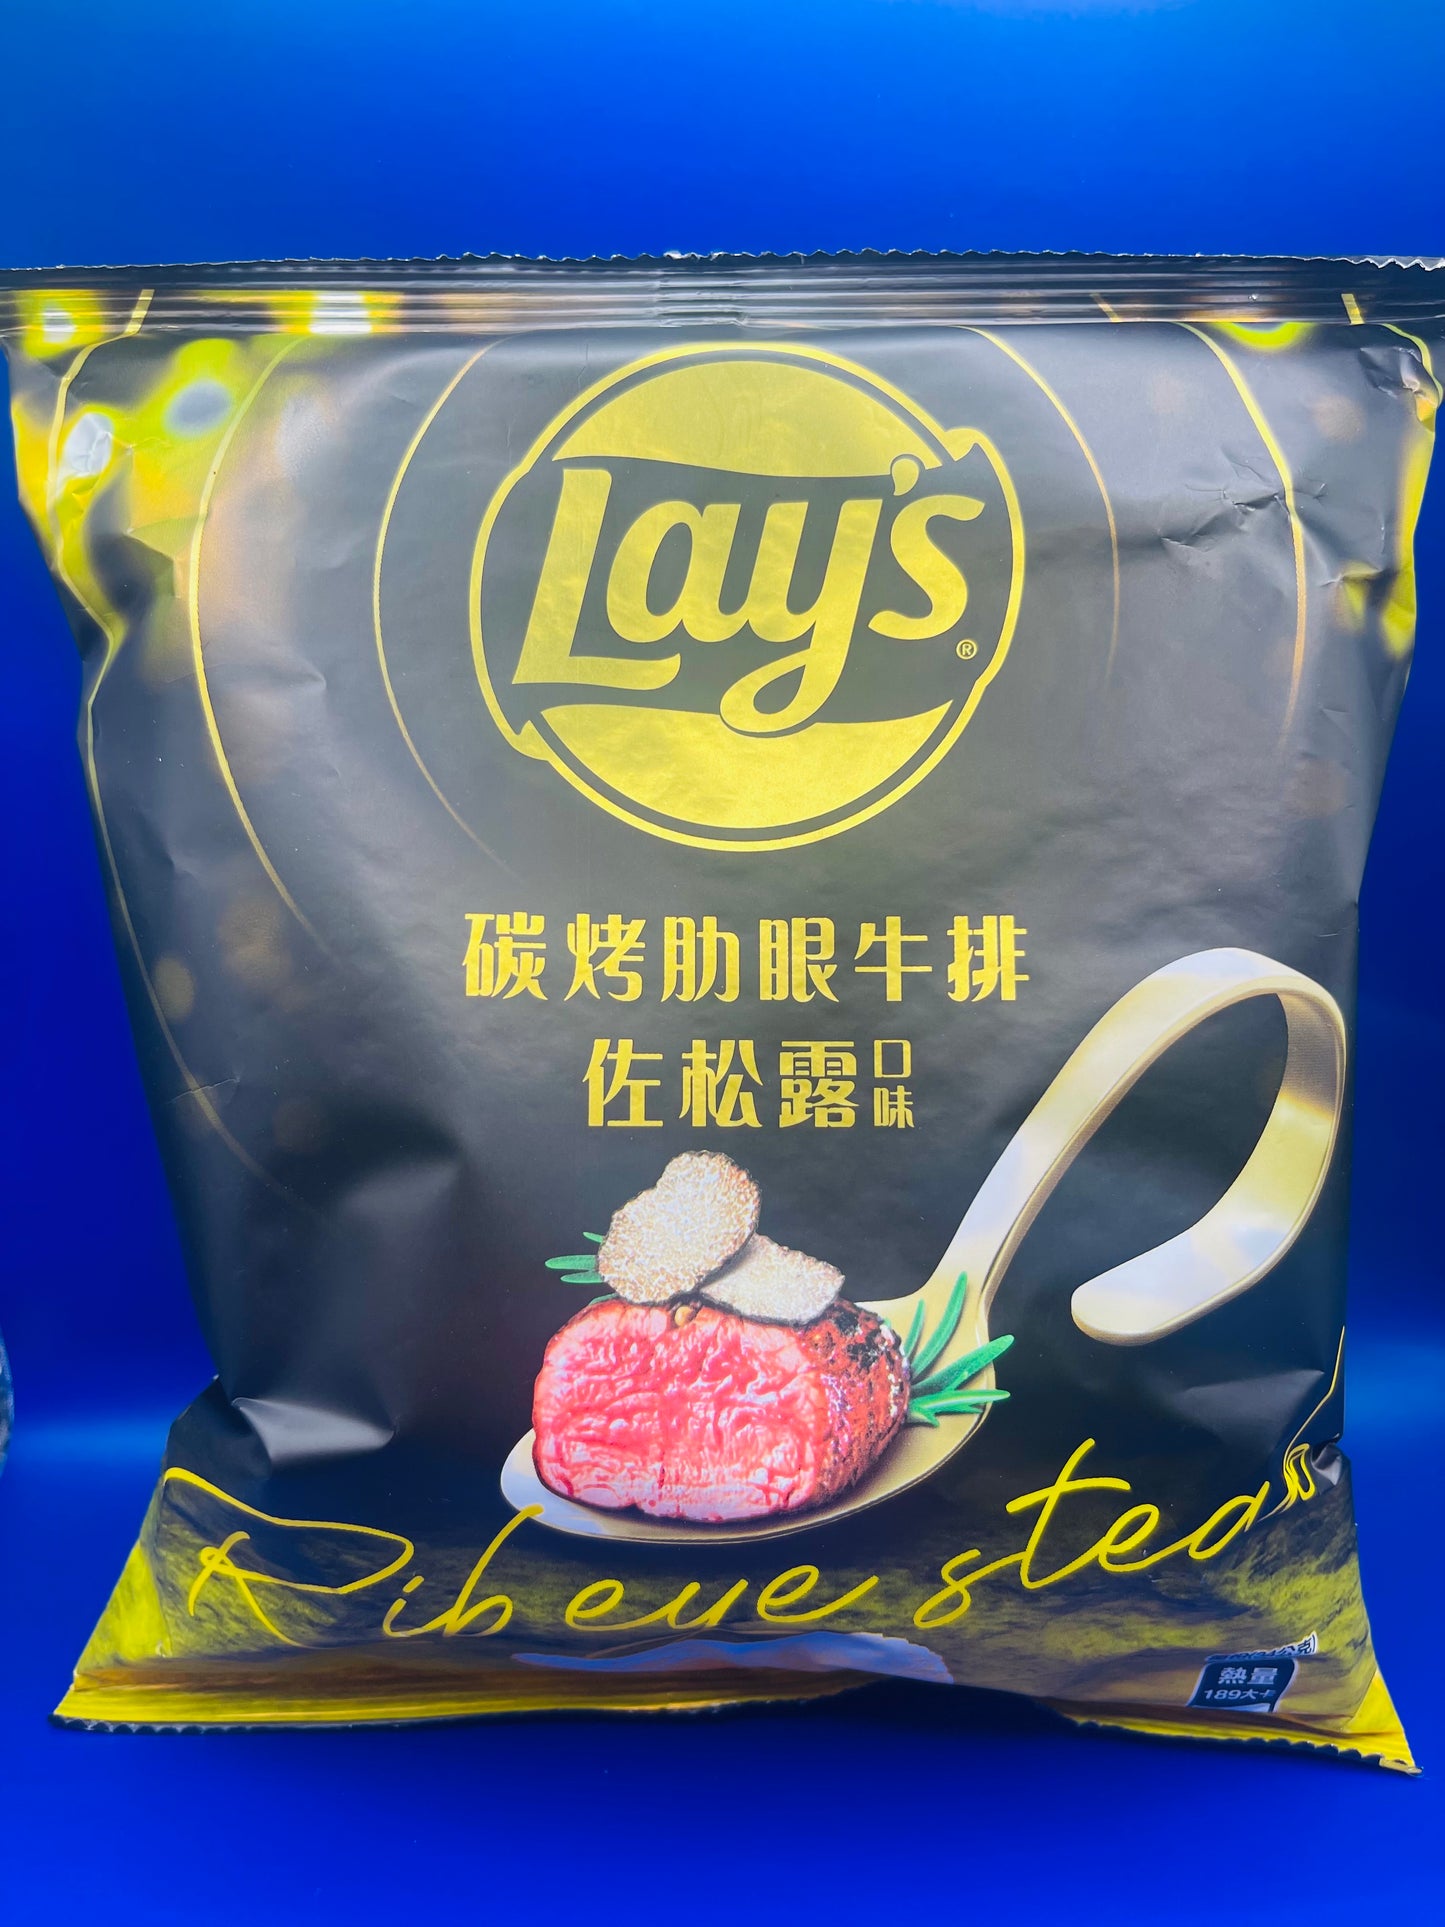 Lay's Chips Rib Eye Steak with Black Truffle Flavor (China)